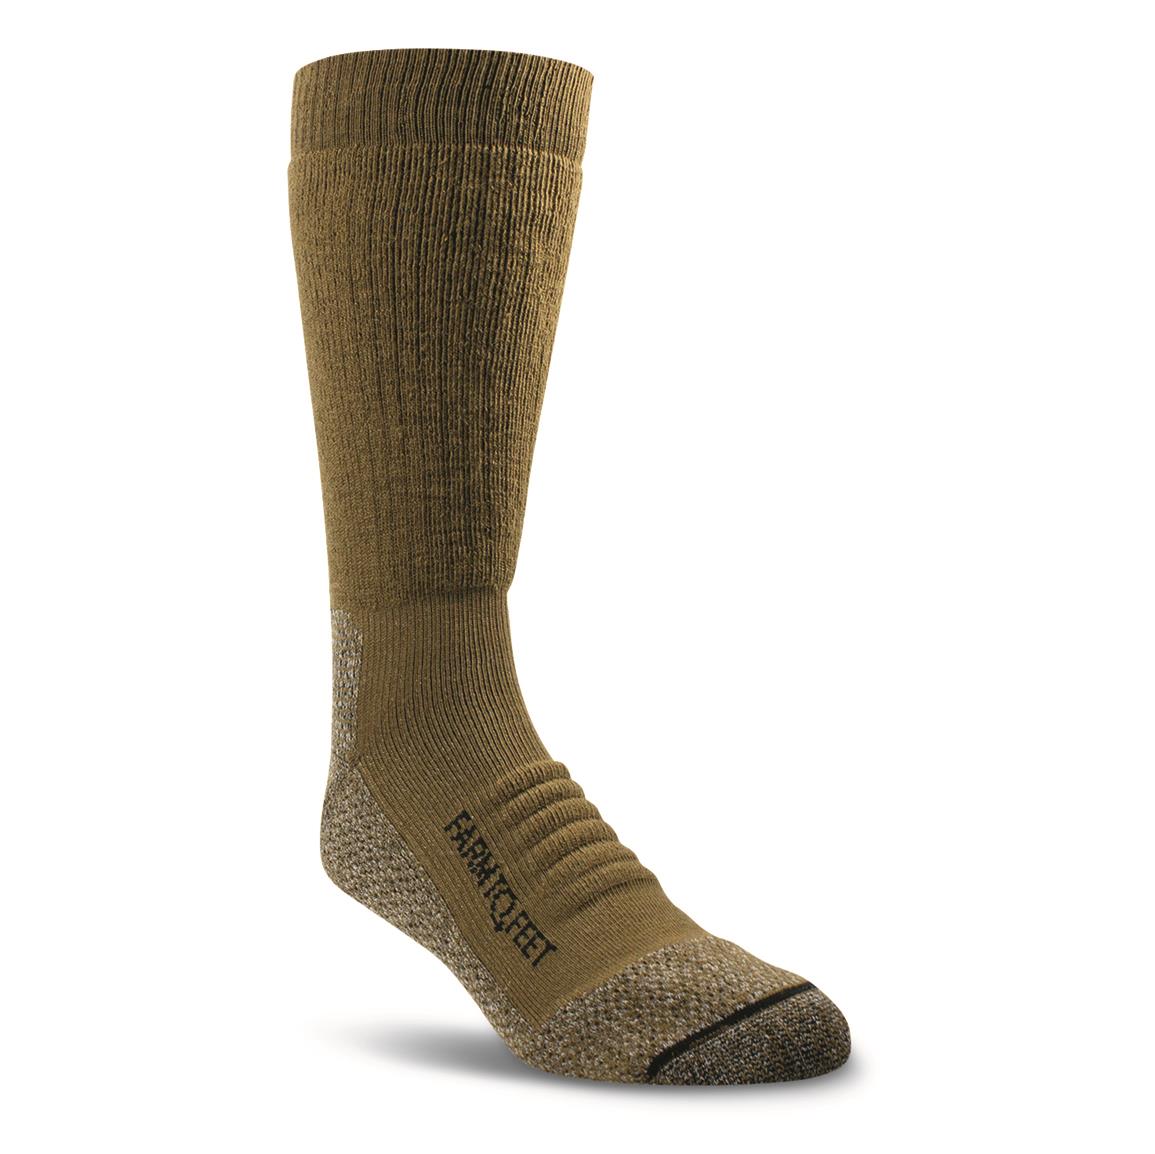 Farm to Feet Men's Quantico Tactical Crew Socks, Coyote